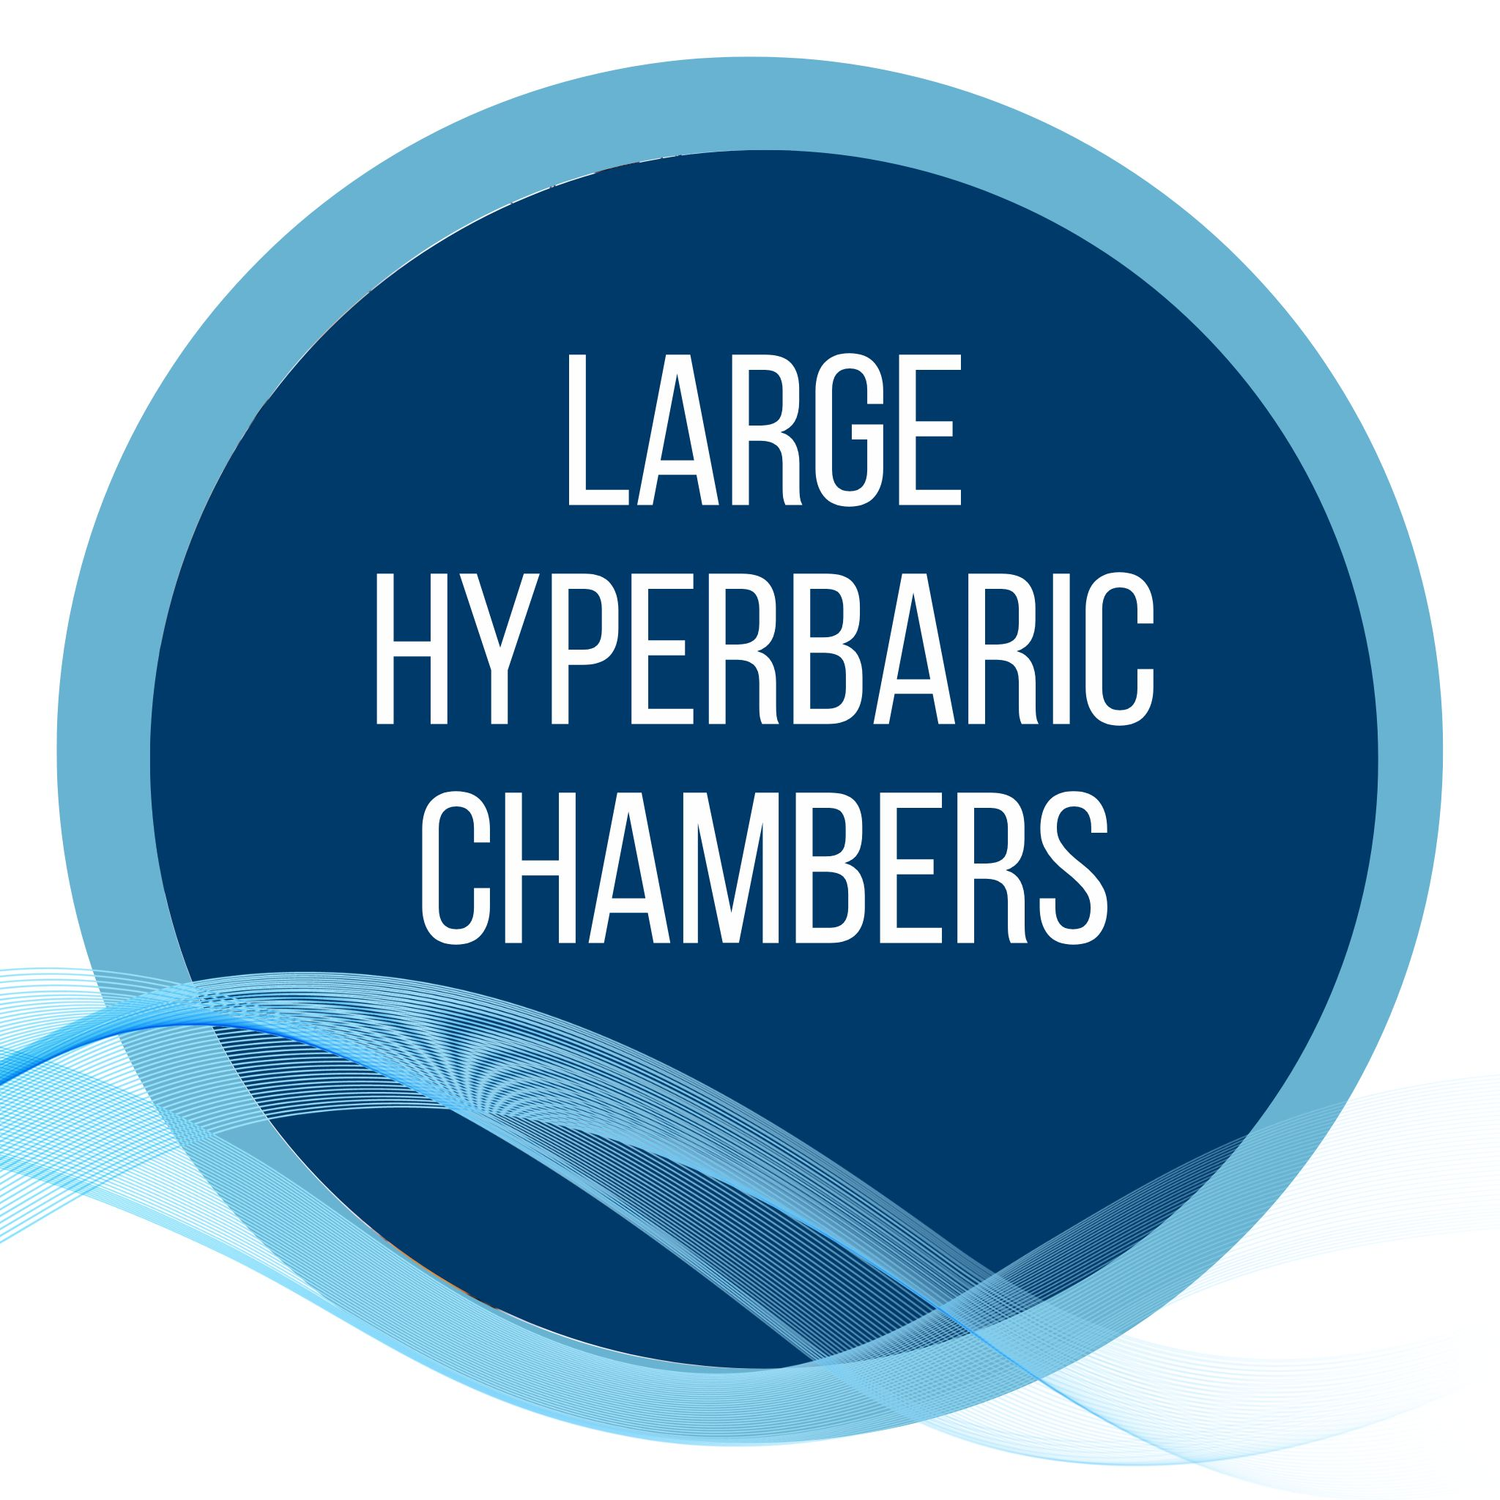 Large Hyperbaric Chambers